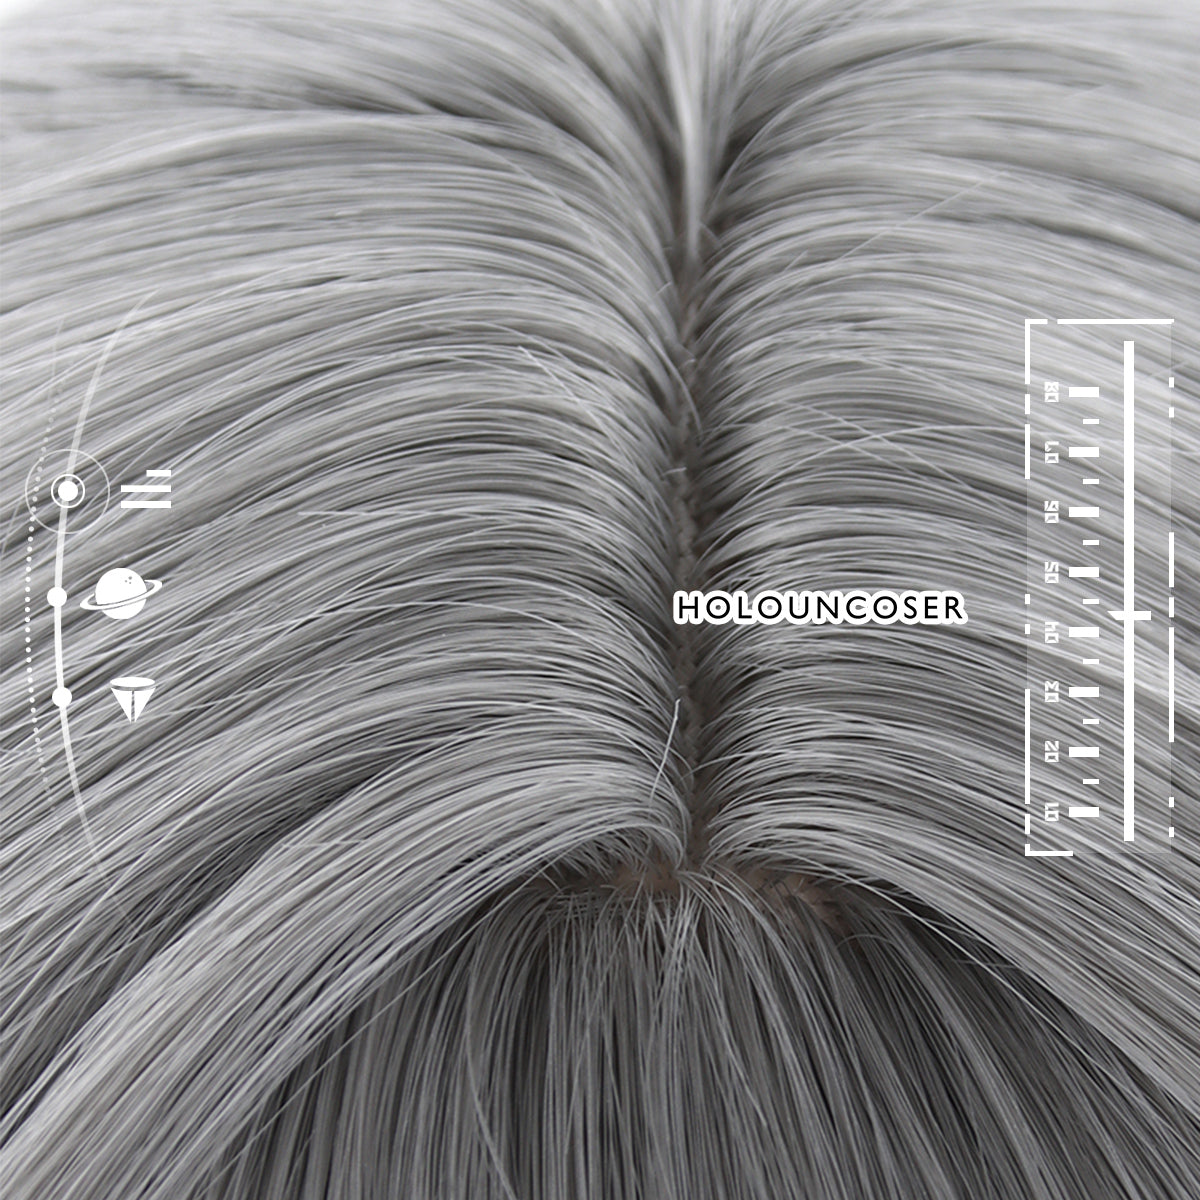 HOLOUN Honkai Star Rail Game Trailblazer Cosplay Wig Male Caelus Female Stelle Rose Net Heat Resistant Synthetic Fiber Comb Hairpin Halloween